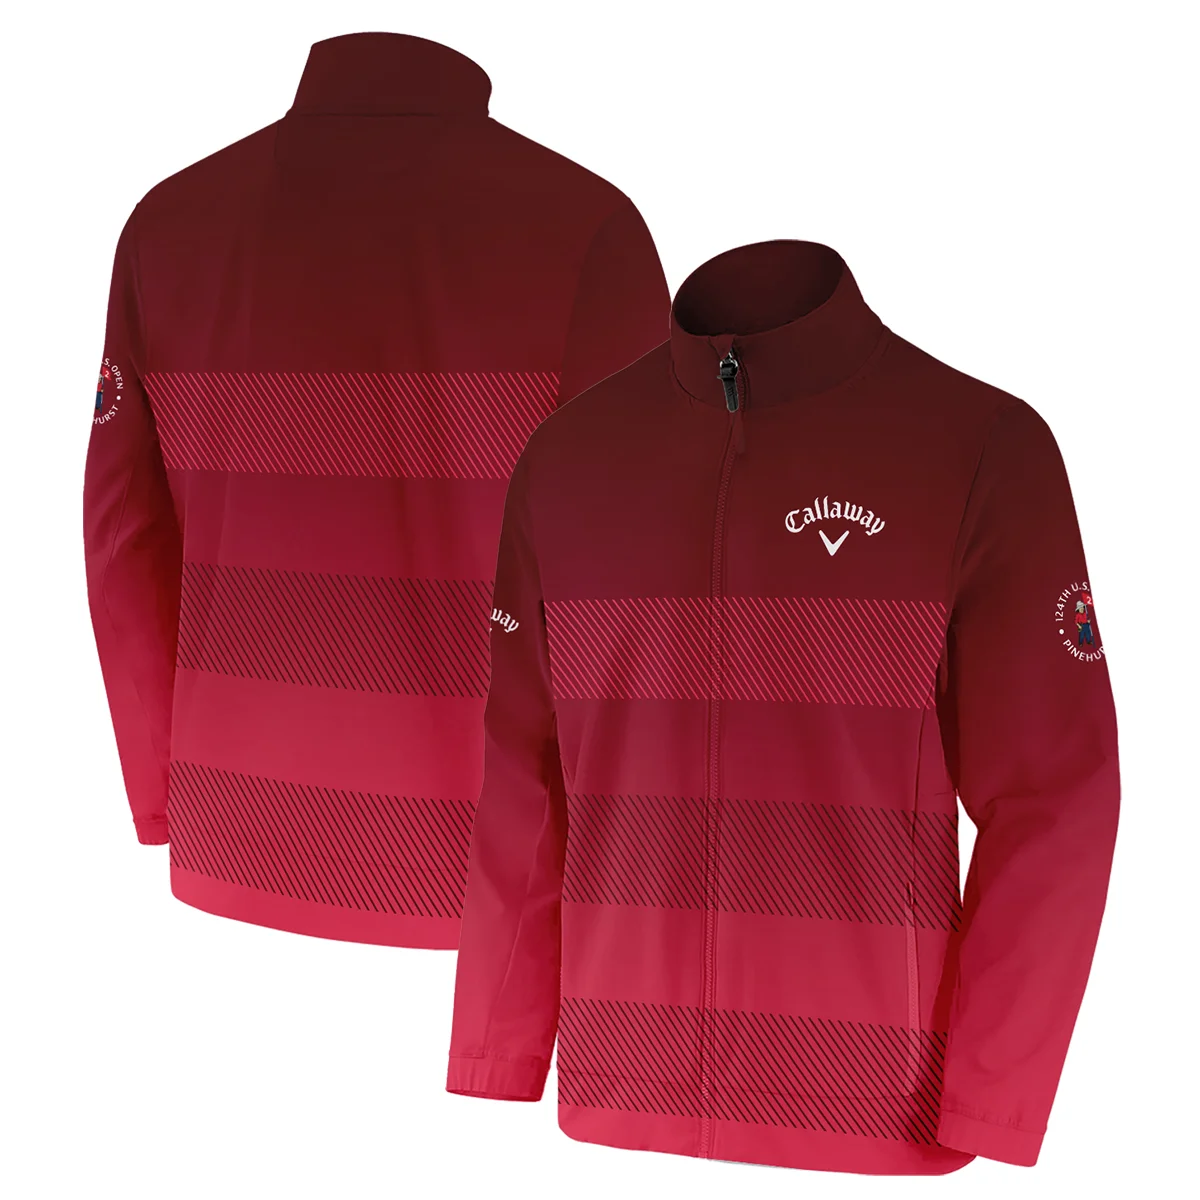 Golf Callaway 124th U.S. Open Pinehurst Sports Quarter-Zip Jacket Red Gradient Stripes Pattern All Over Print Quarter-Zip Jacket